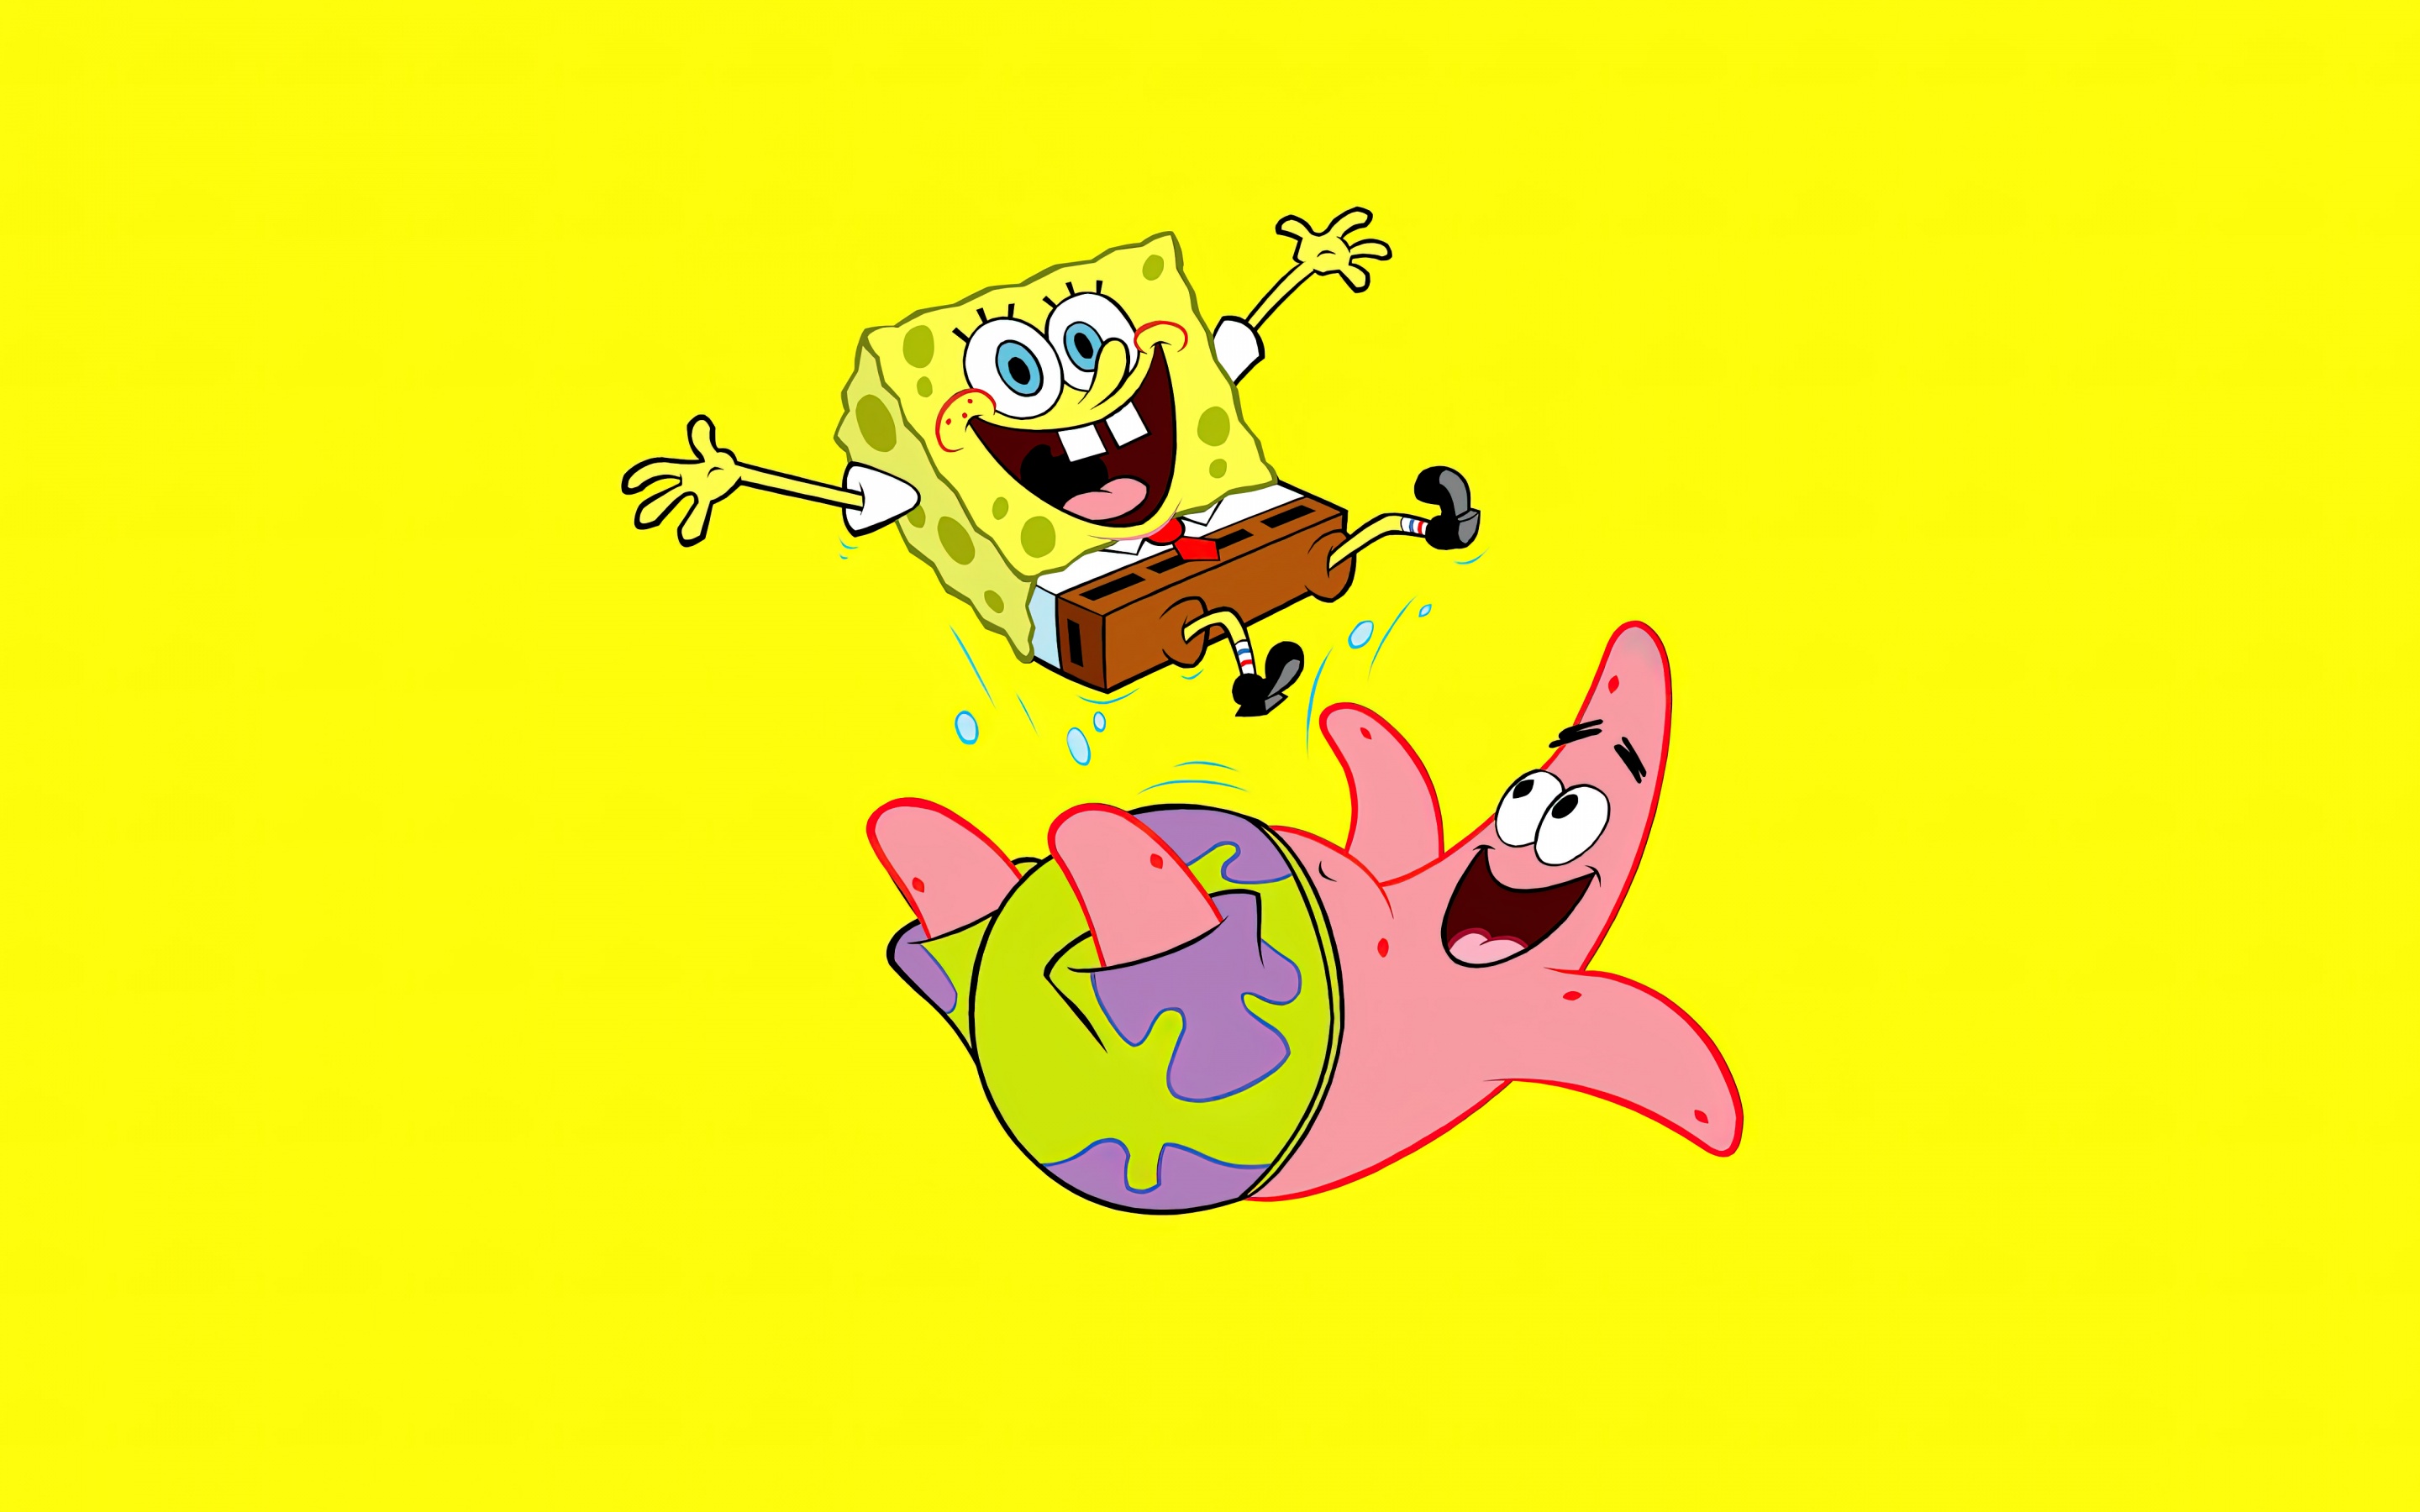 spongebob and patrick love quotes